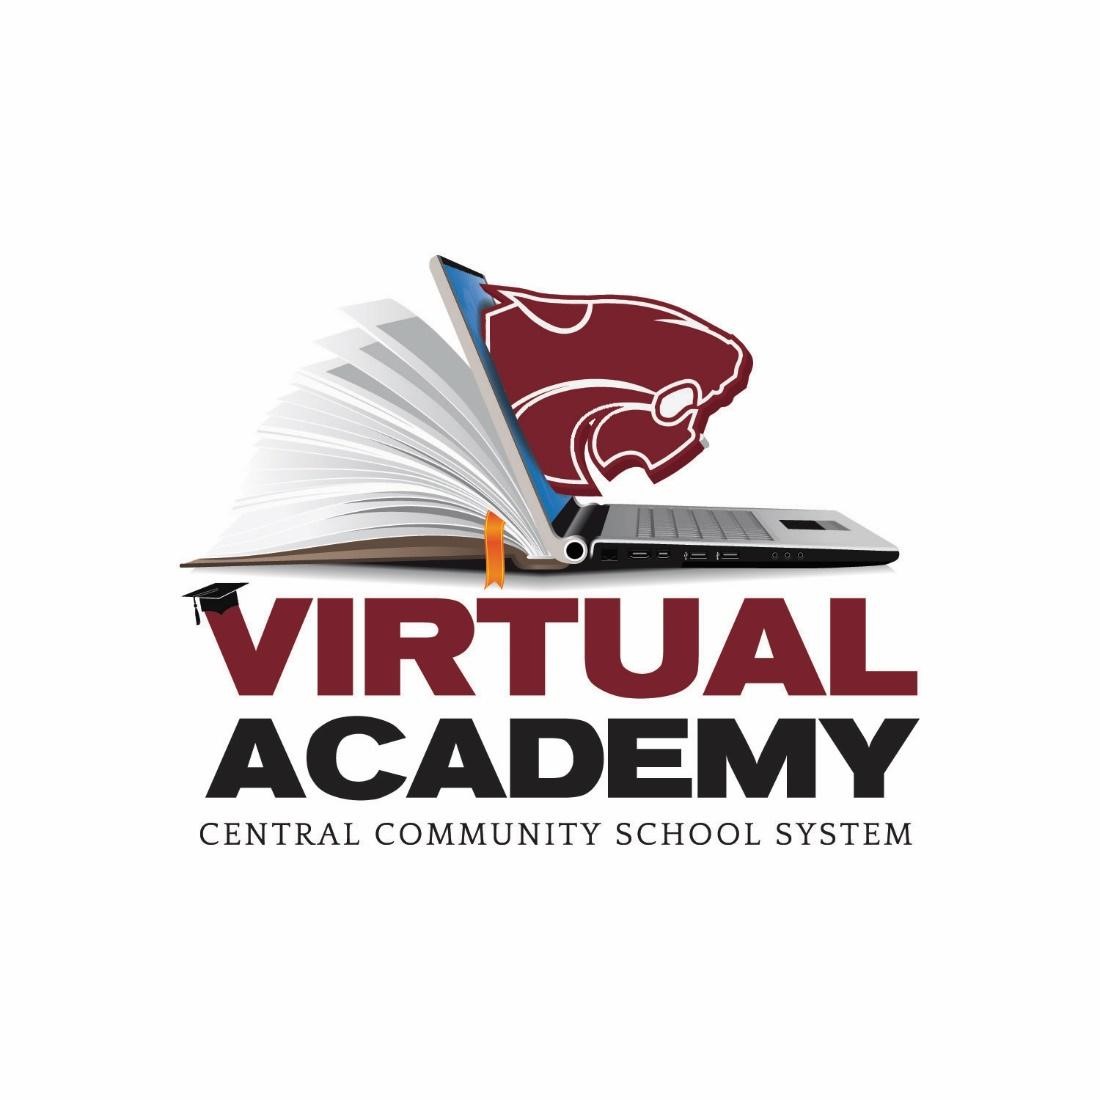 Virtual Academy Central Community School System